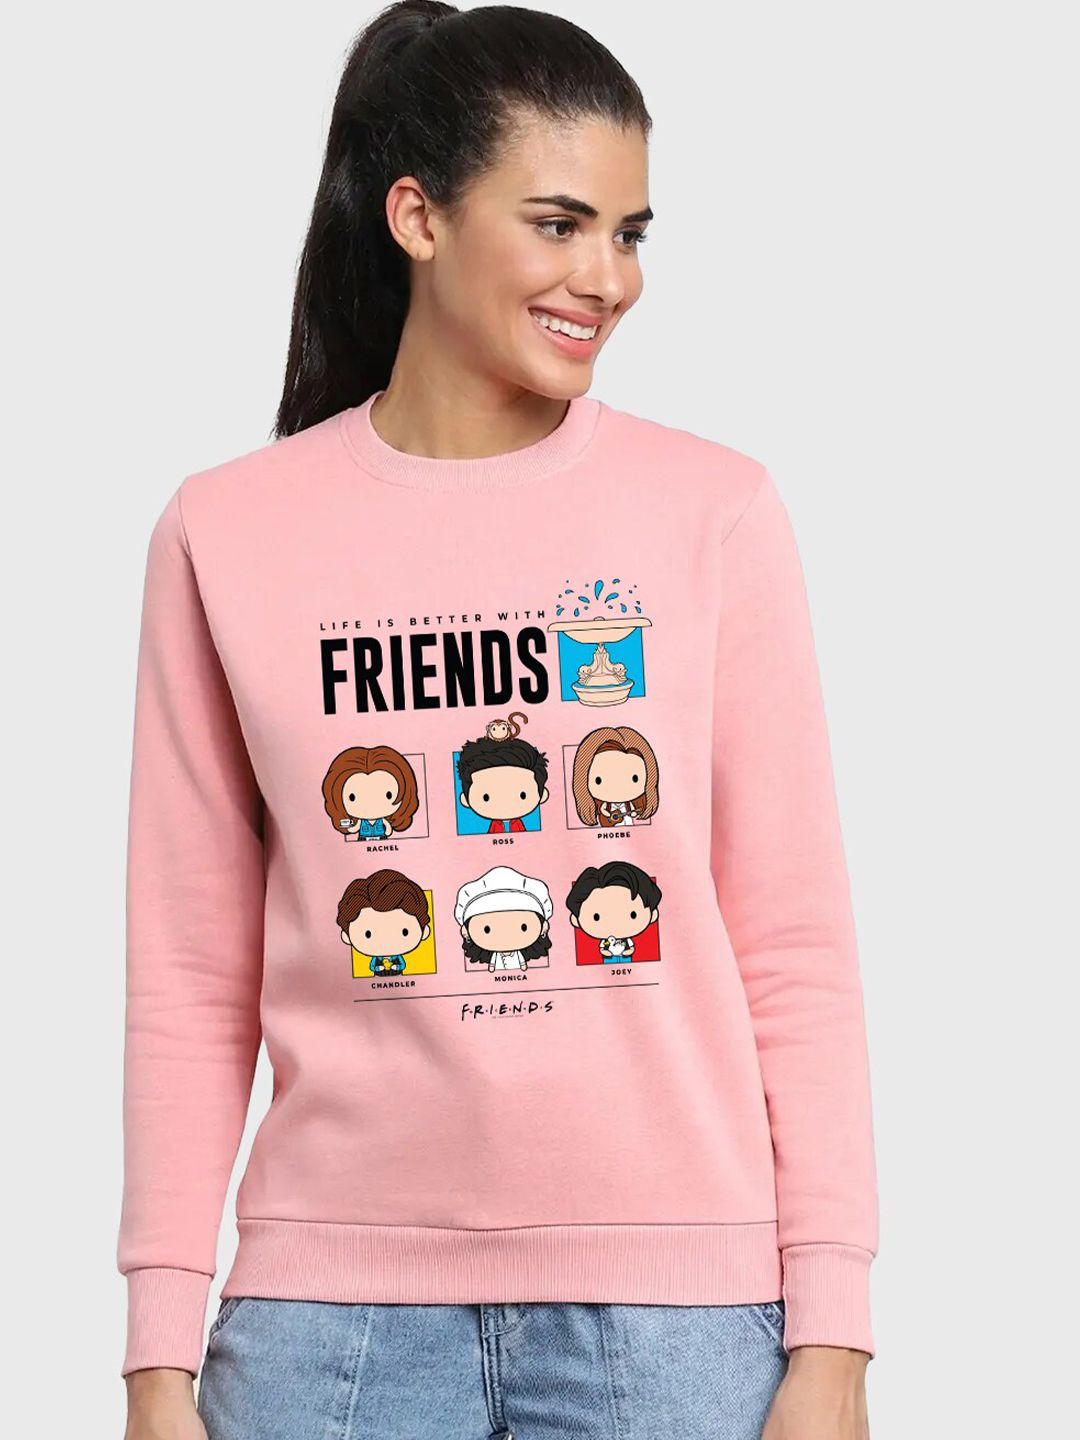 Bewakoof Pink Friends Printed Round Neck Long Sleeves Fleece Pullover Sweatshirt